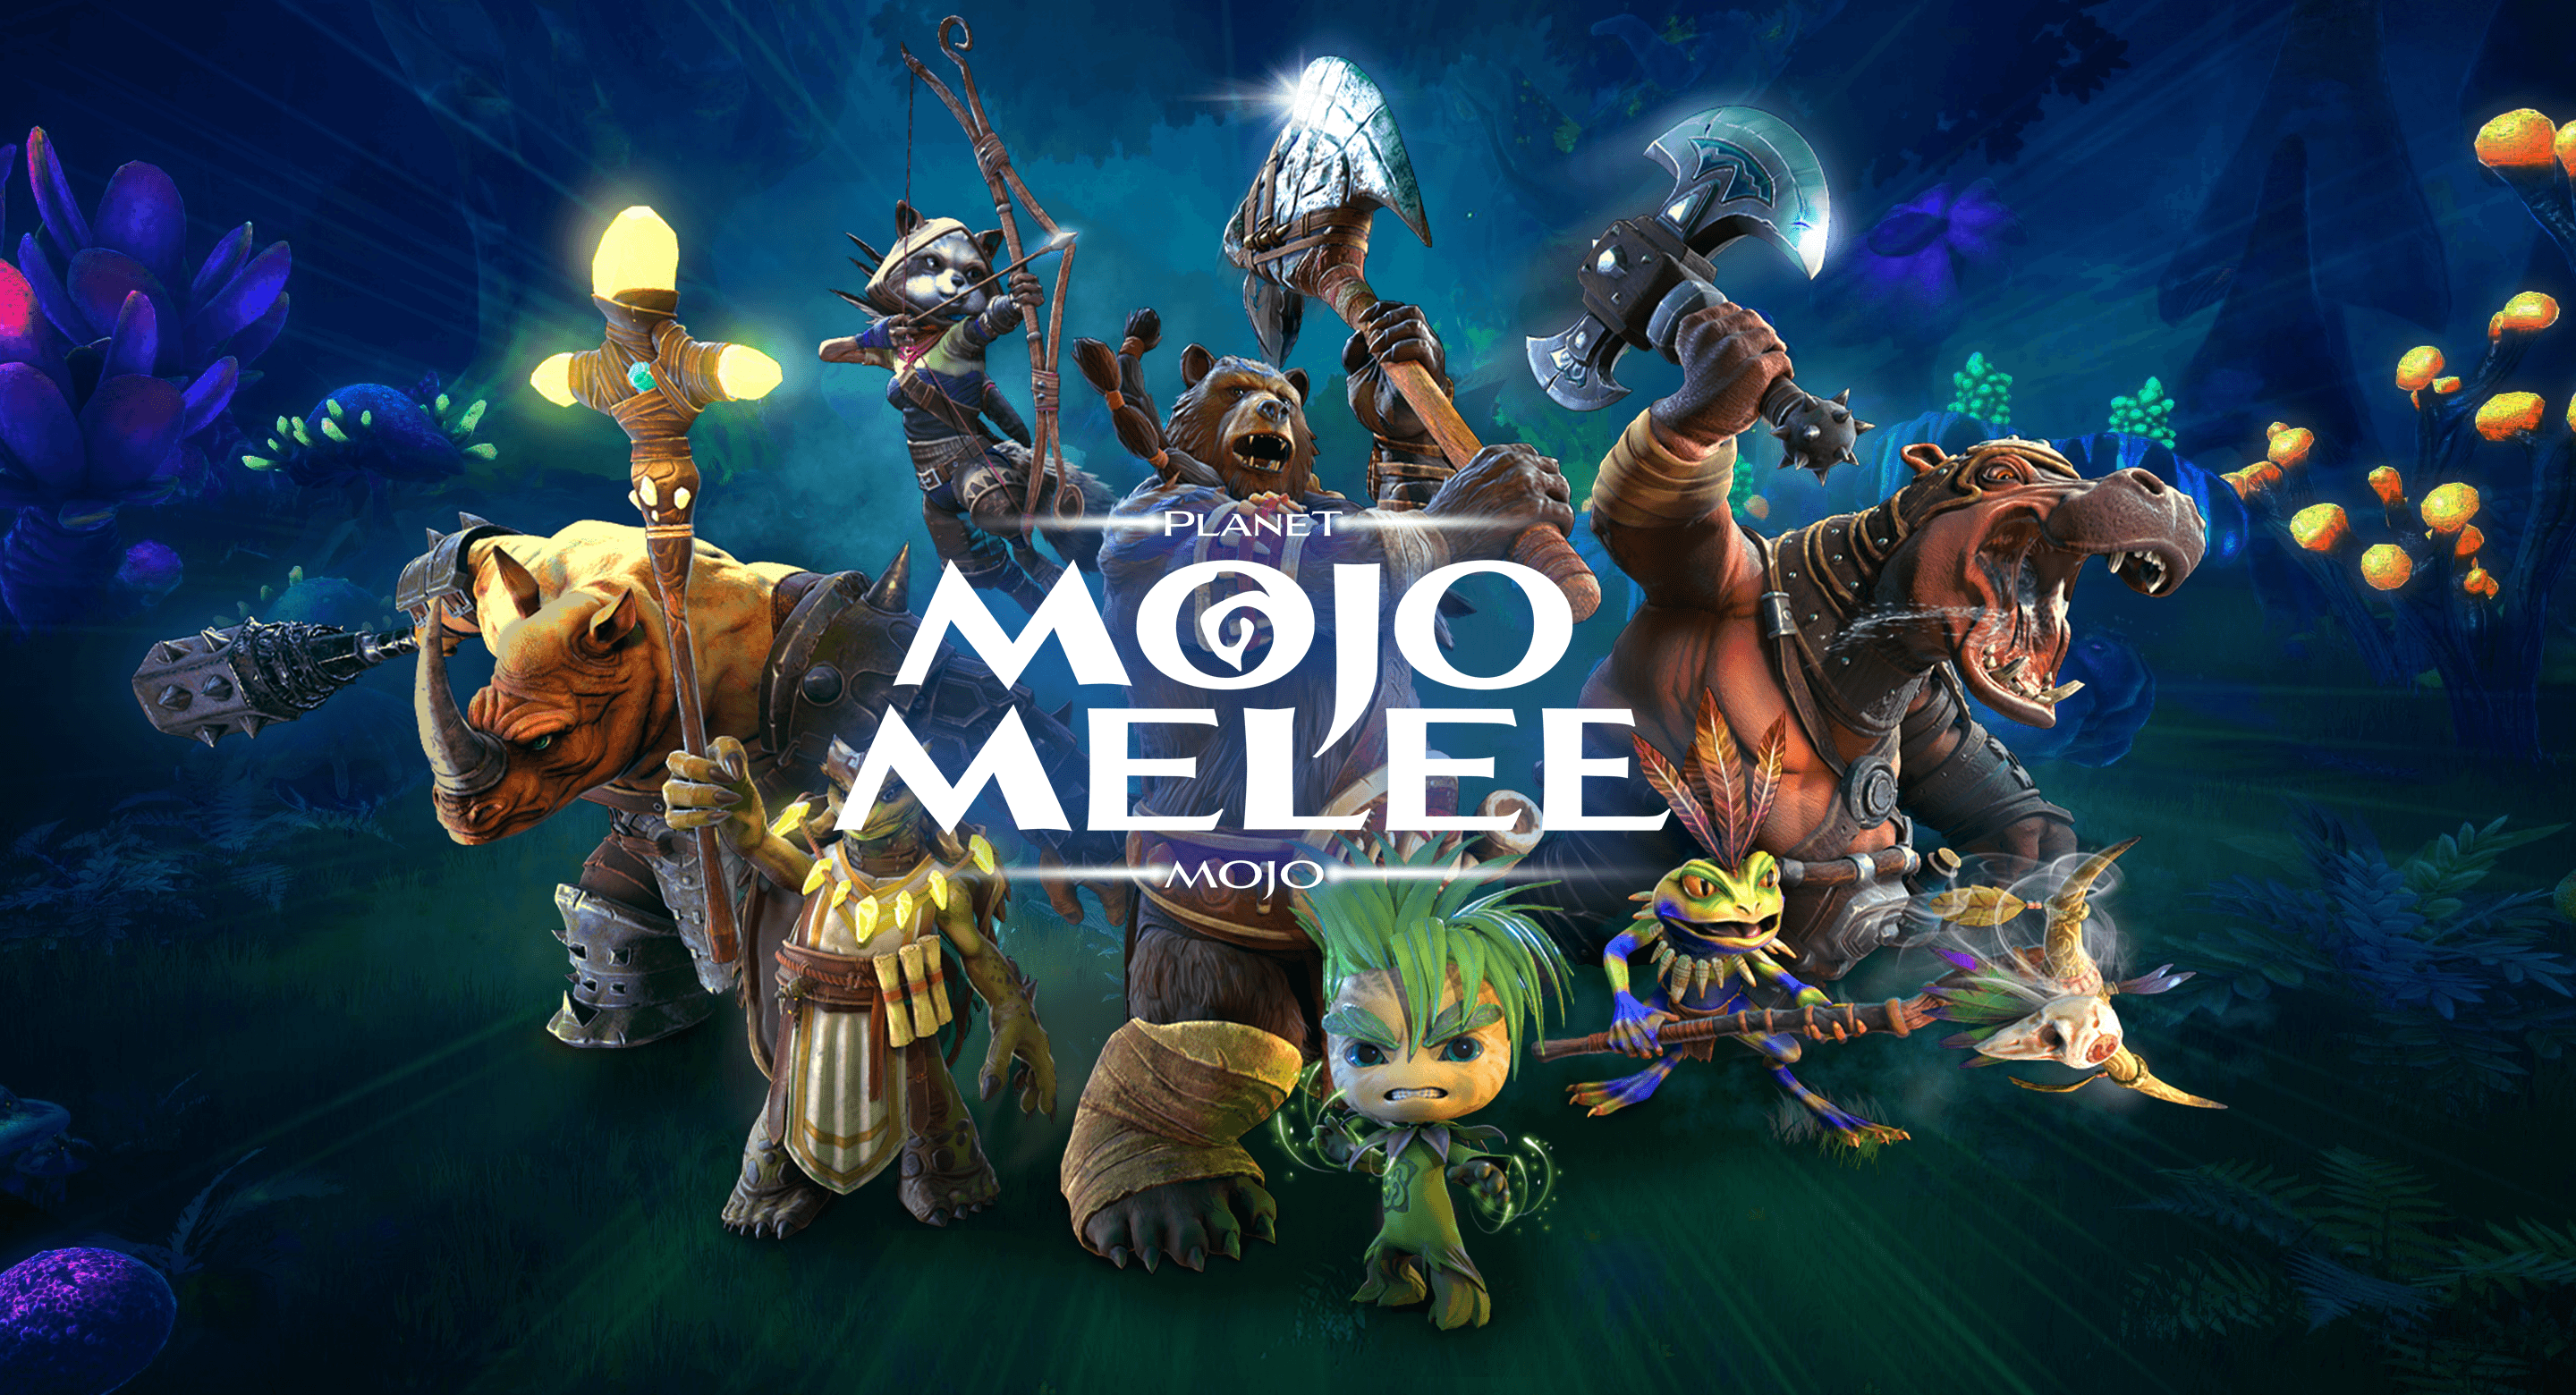 MojoMelee-HeroShot-2880x1560.png